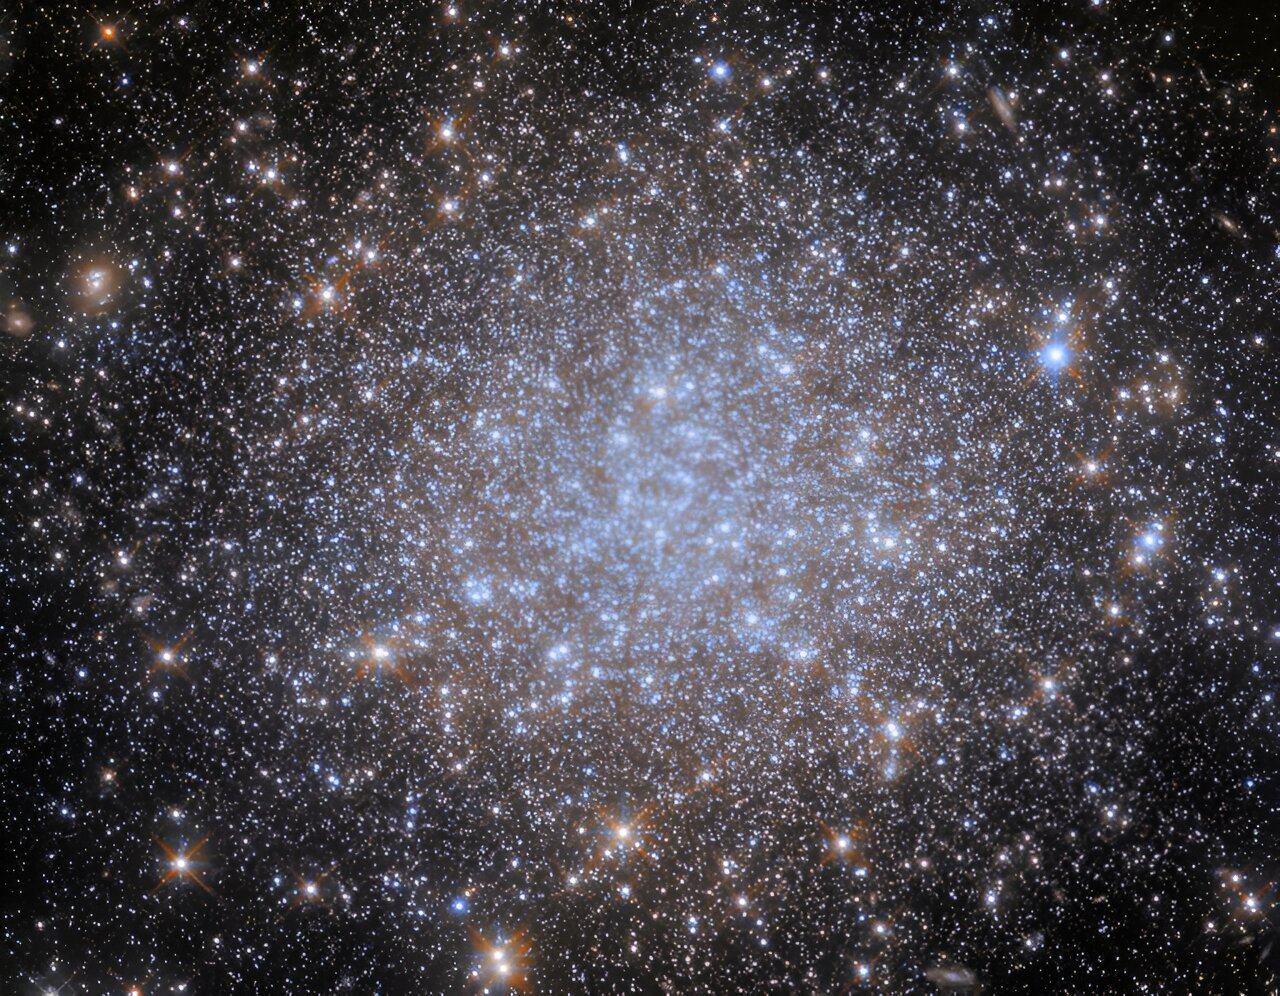 Hubble captures dense globular cluster NGC 1841